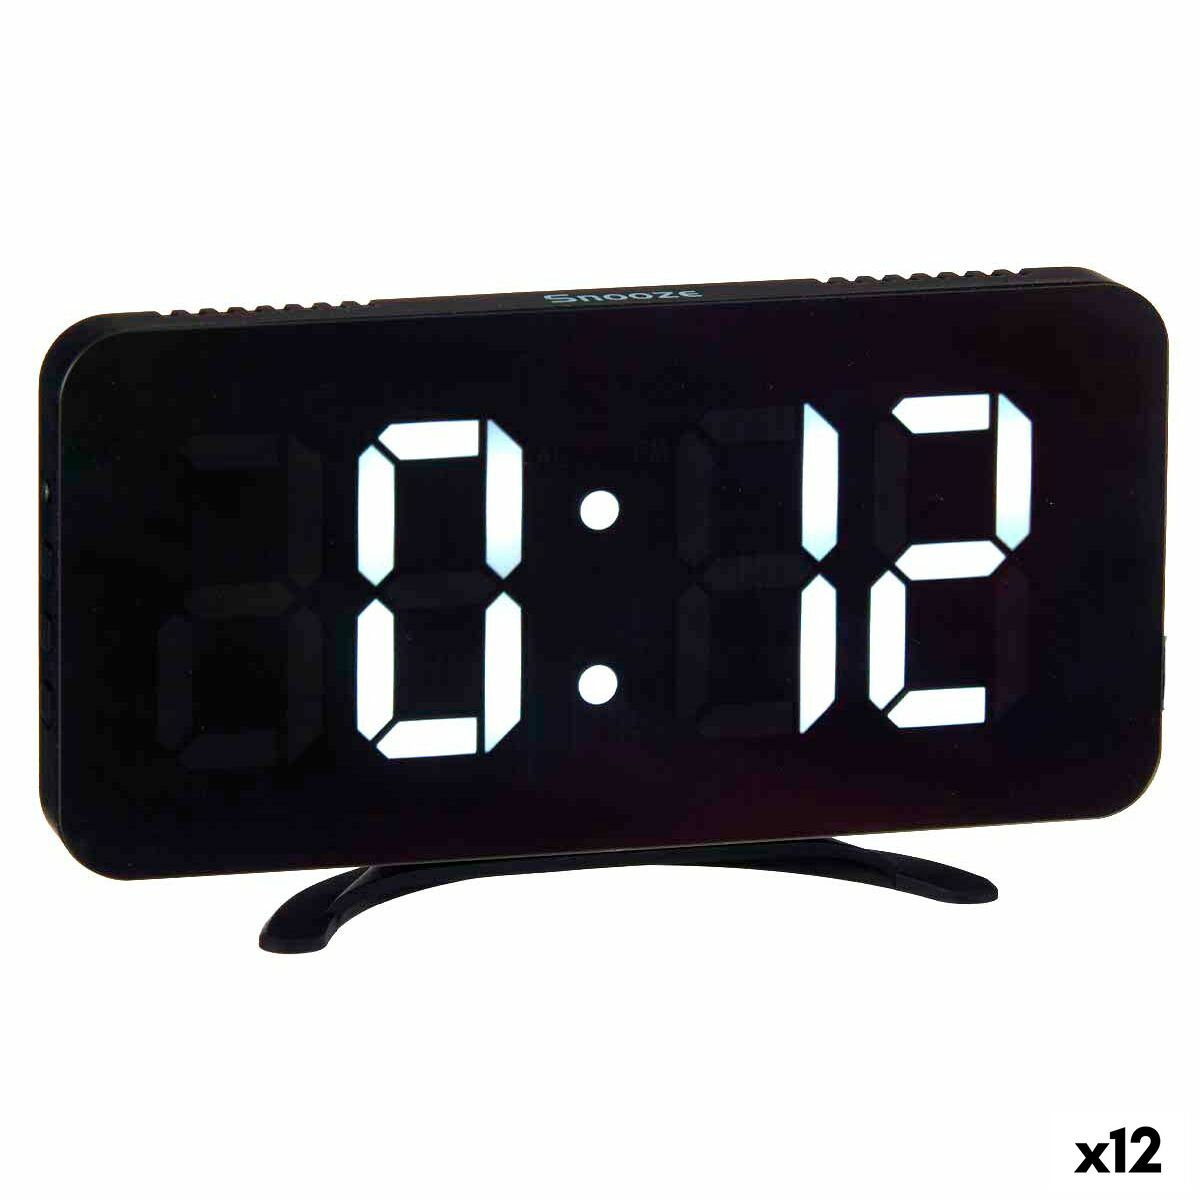 Digital Desk Clock Black ABS 15.7 x 7.7 x 1.5 cm (12 parts)